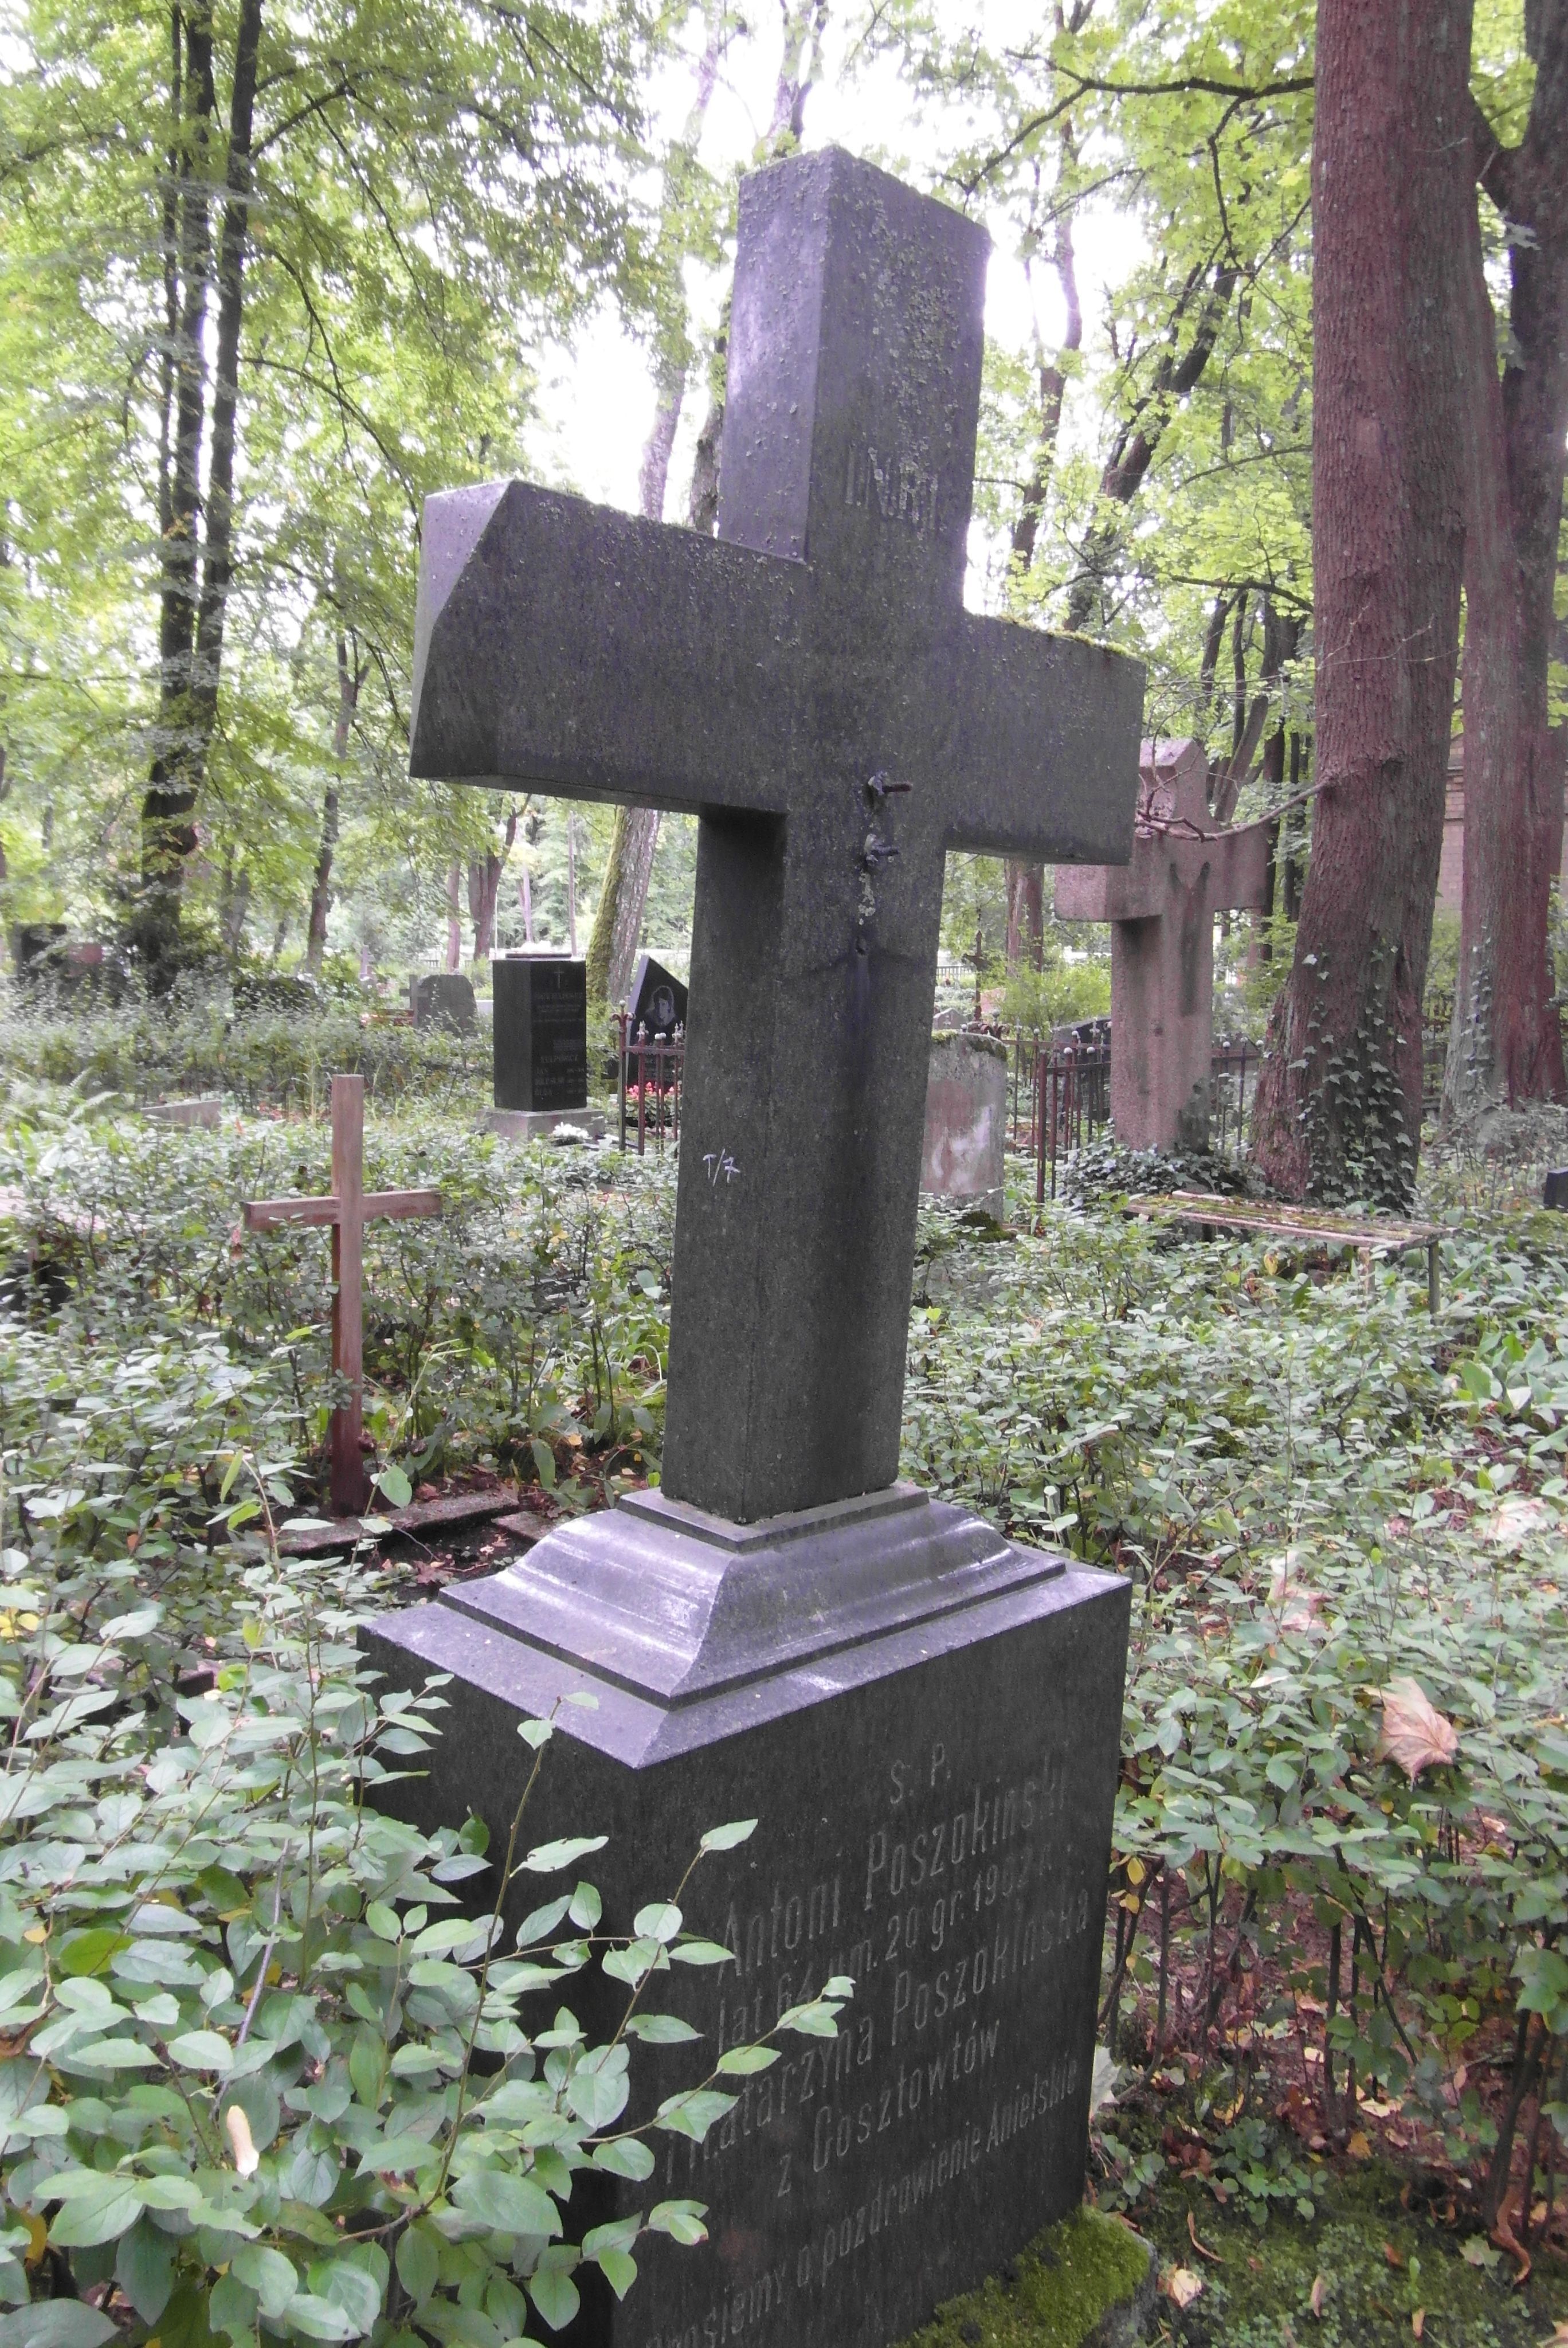 Tombstone of Atnoni Poshkinsky, Catherine Poshokinskaya, St Michael's cemetery in Riga, as of 2021.